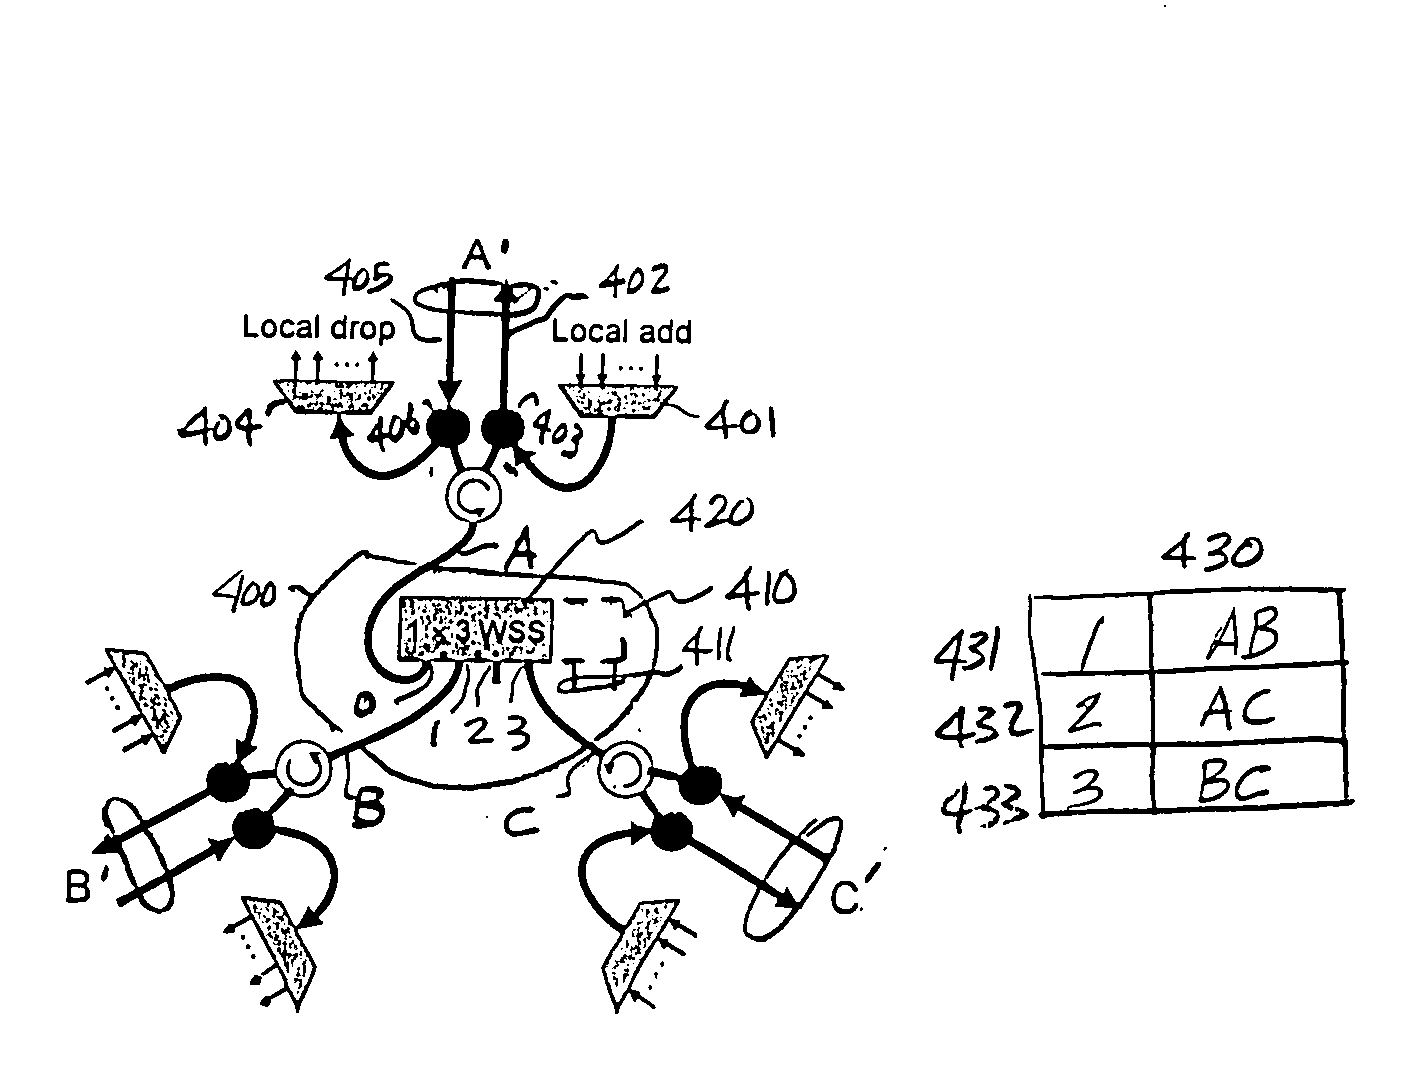 Multiple port symmetric reflective wavelength-selective mesh node